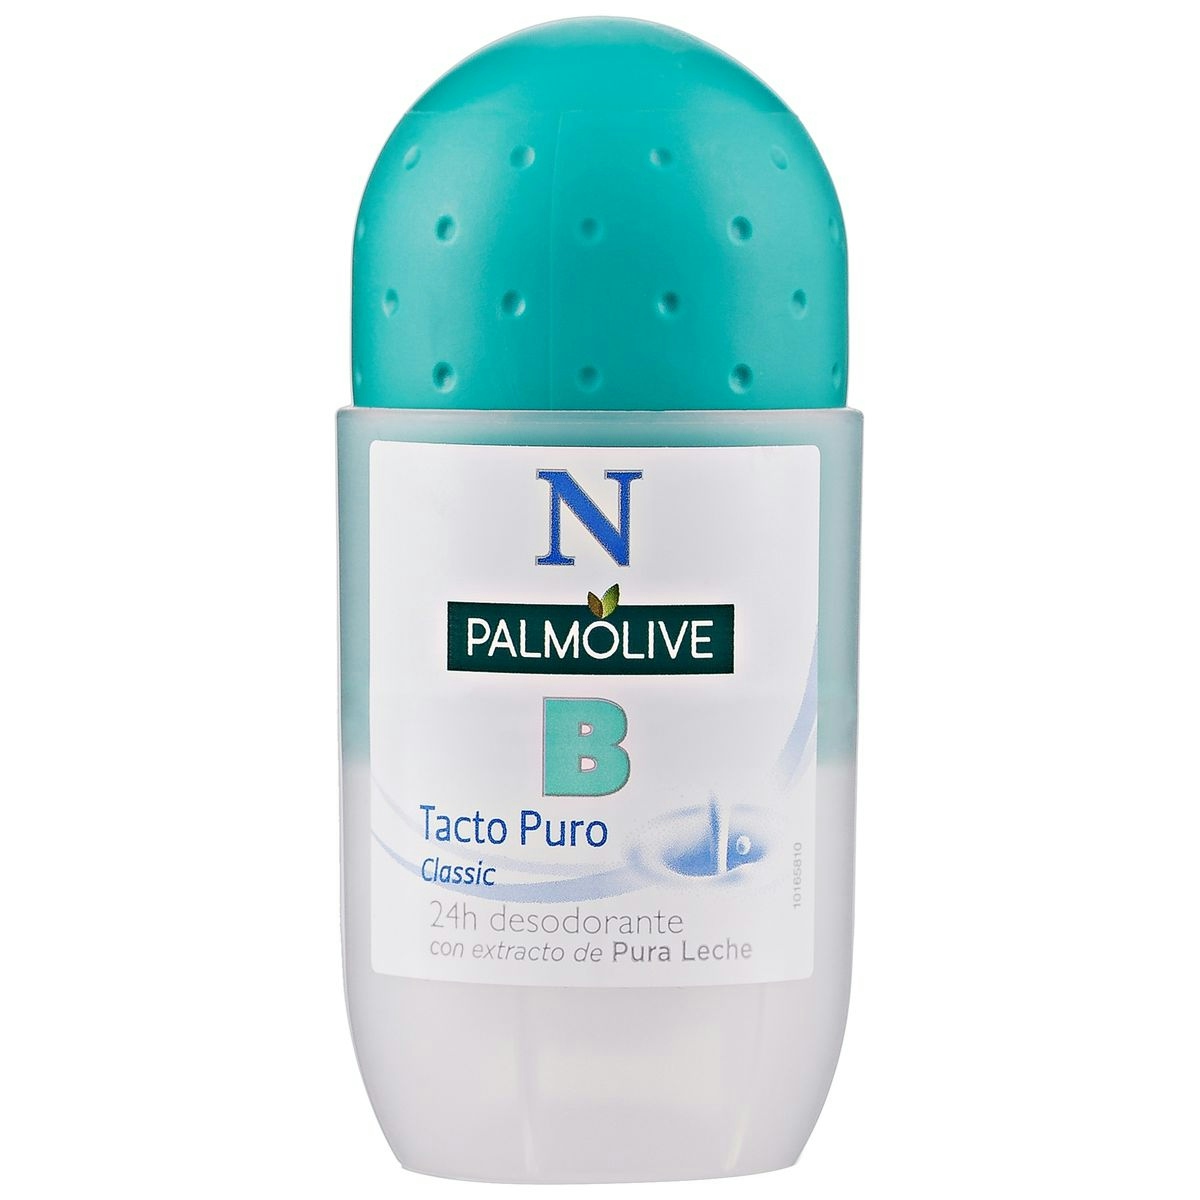 Desodorante tacto puro PALMOLIVE NB roll on 50 ml